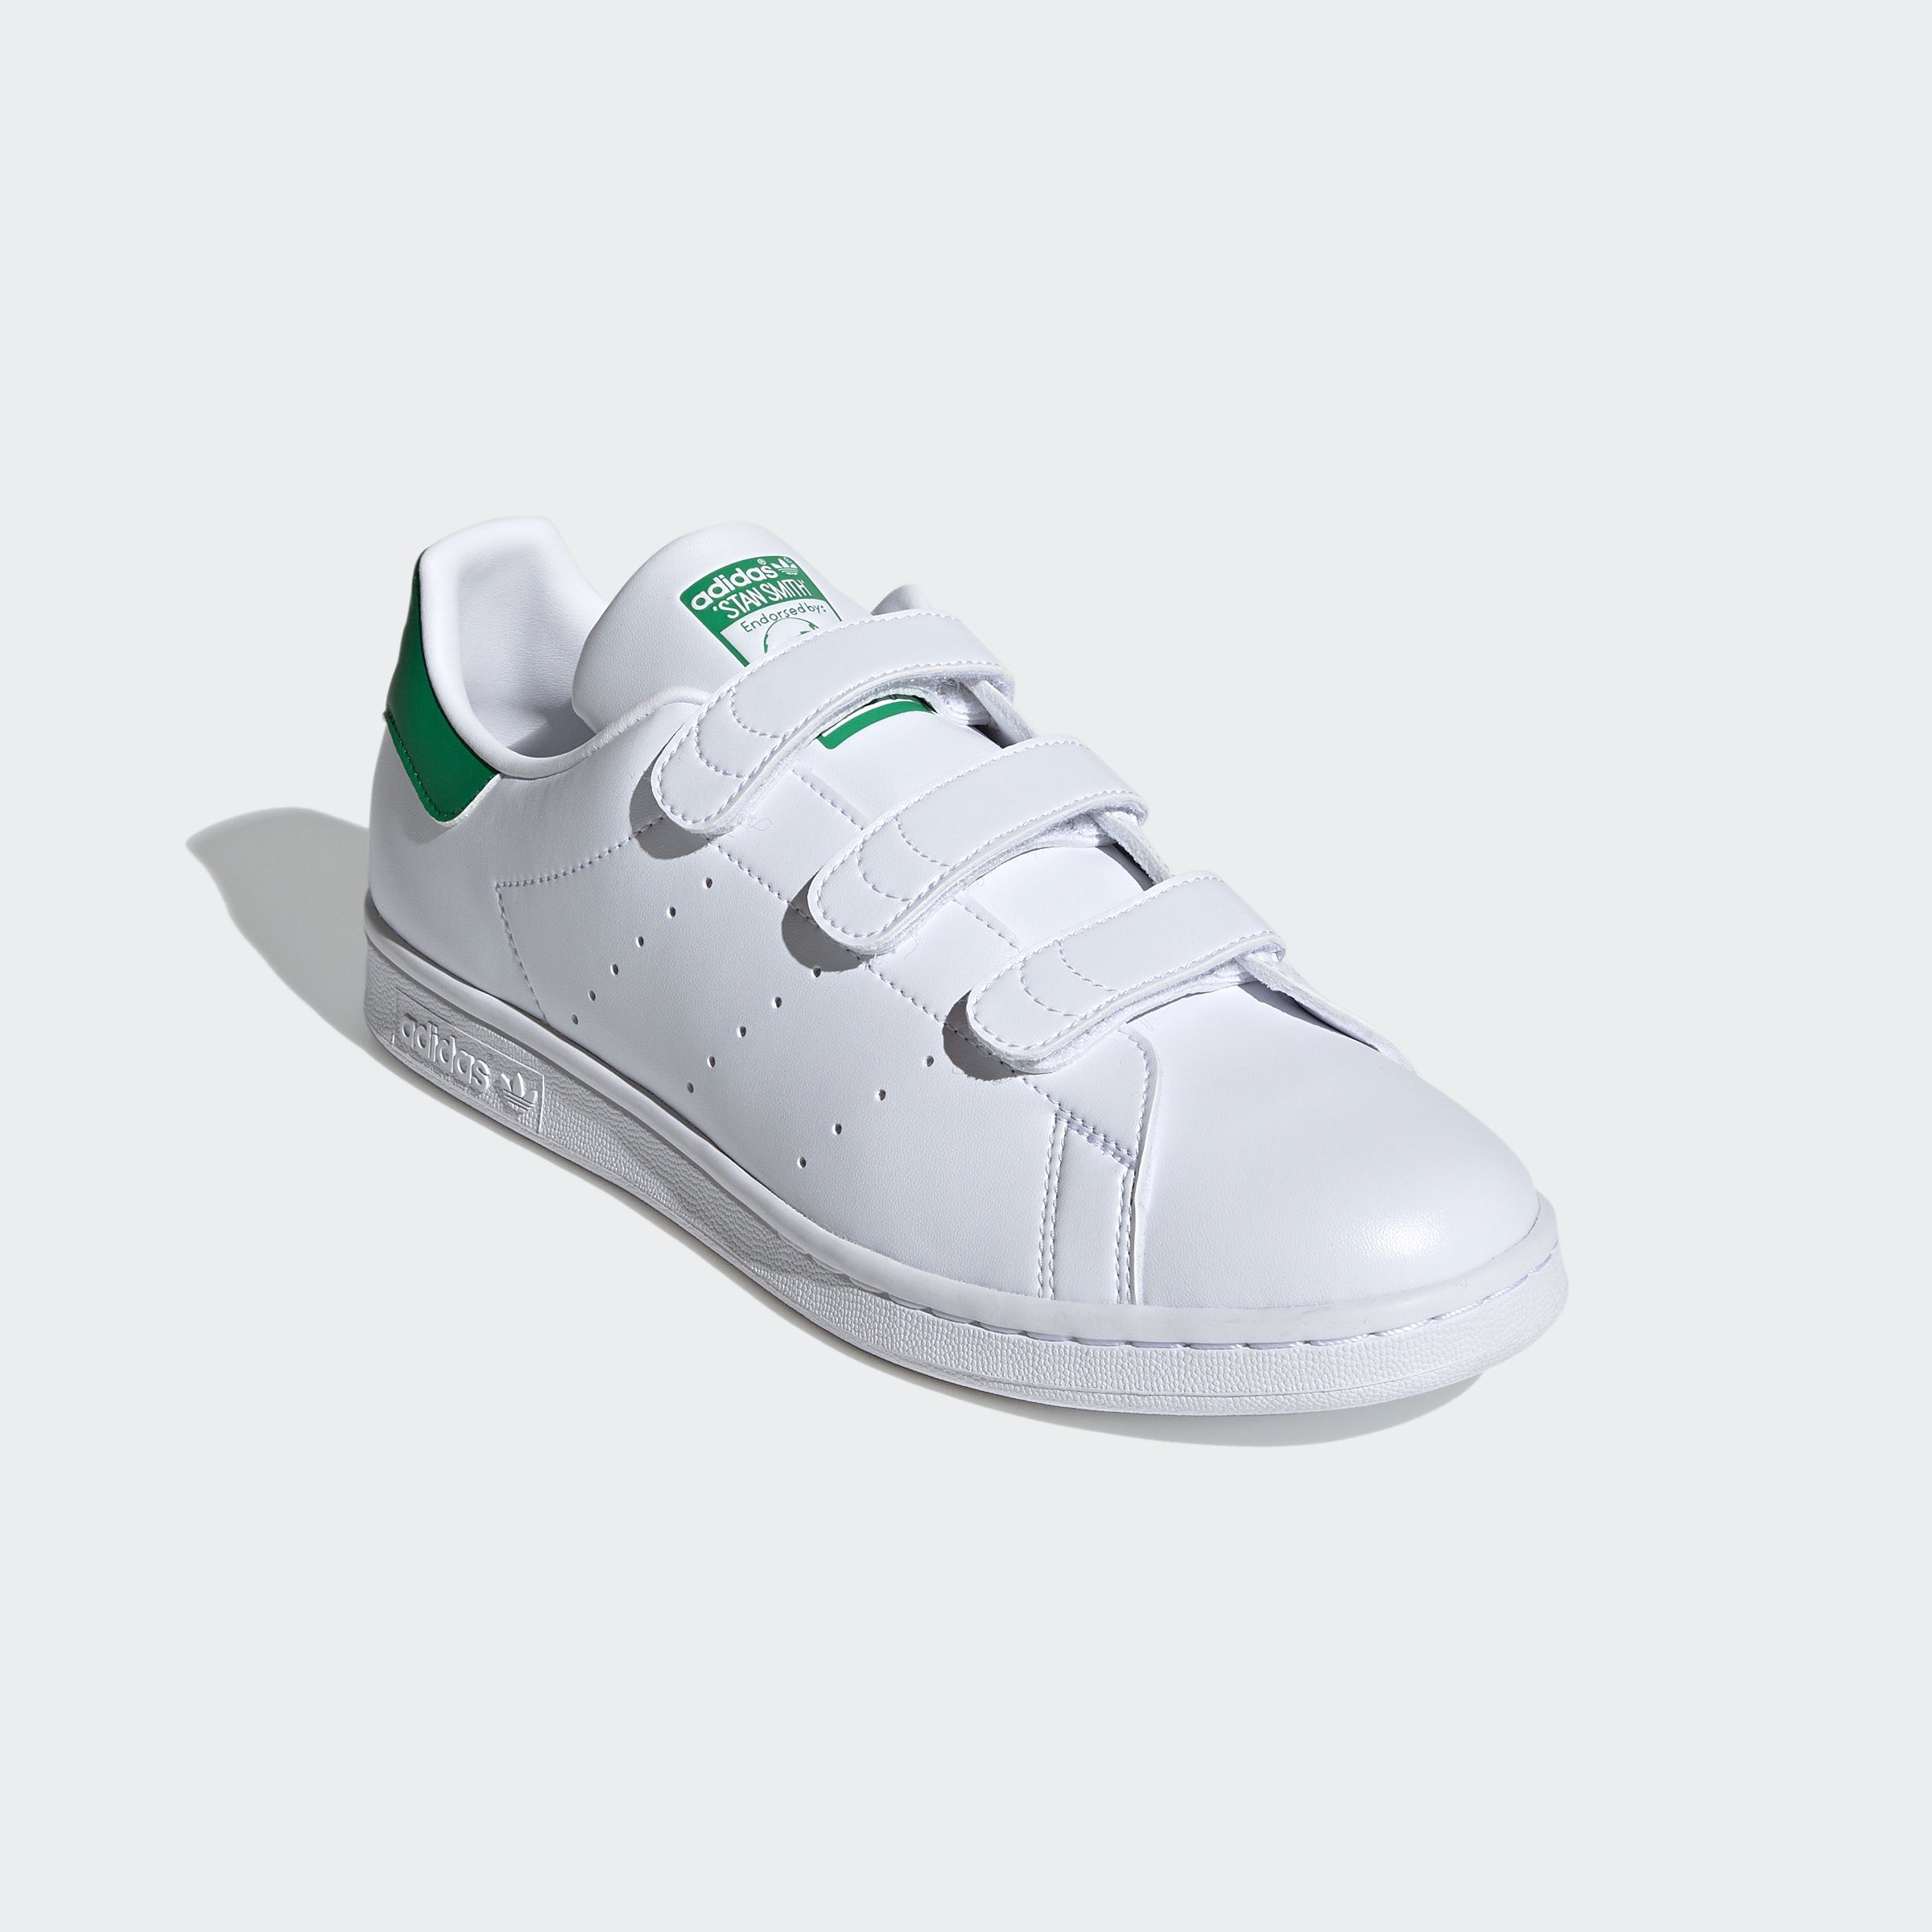 Cloud adidas Sneaker SMITH STAN Cloud White / / Originals Green White